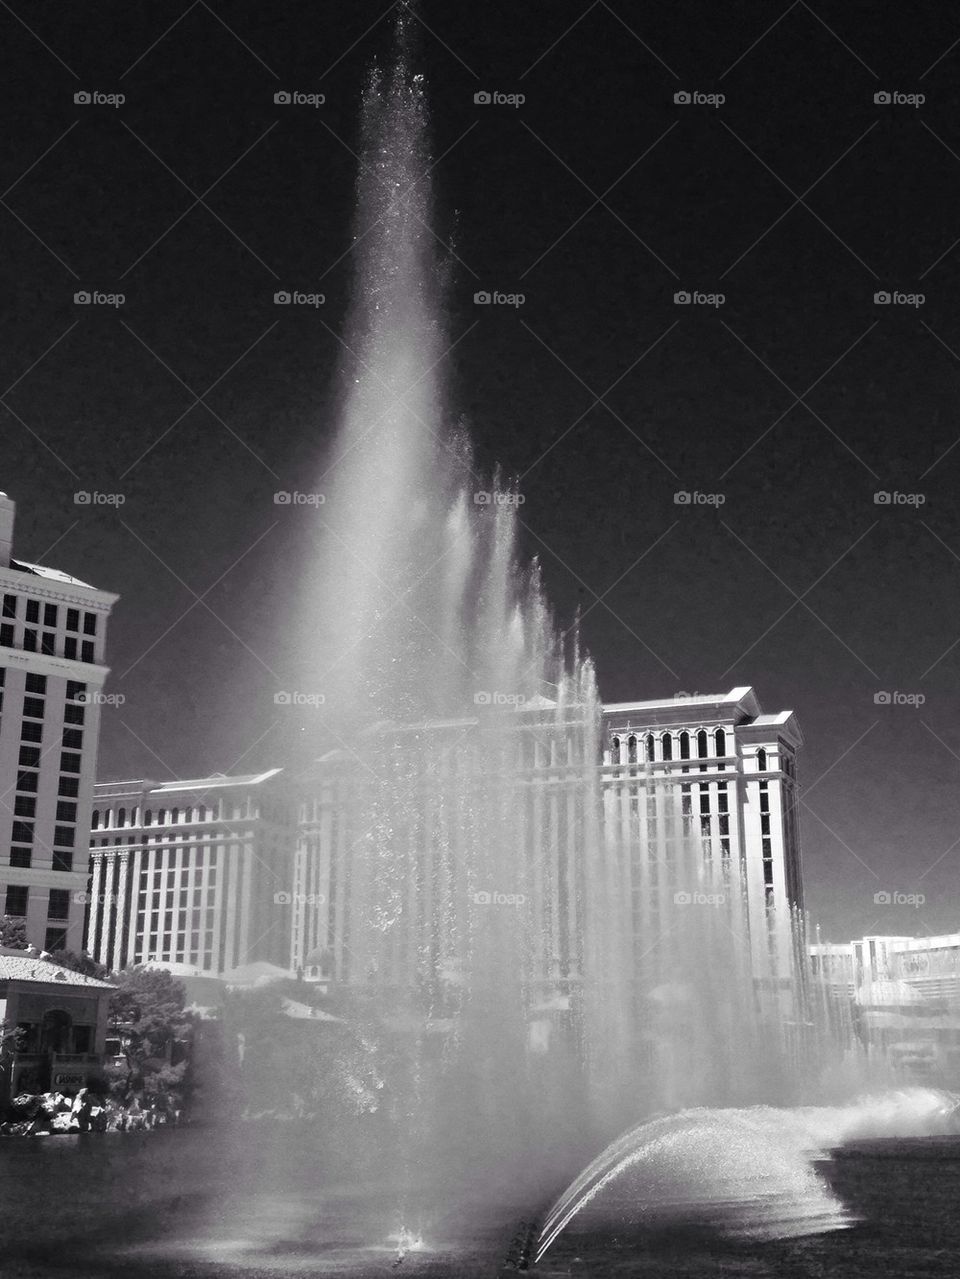 Water show in Vegas